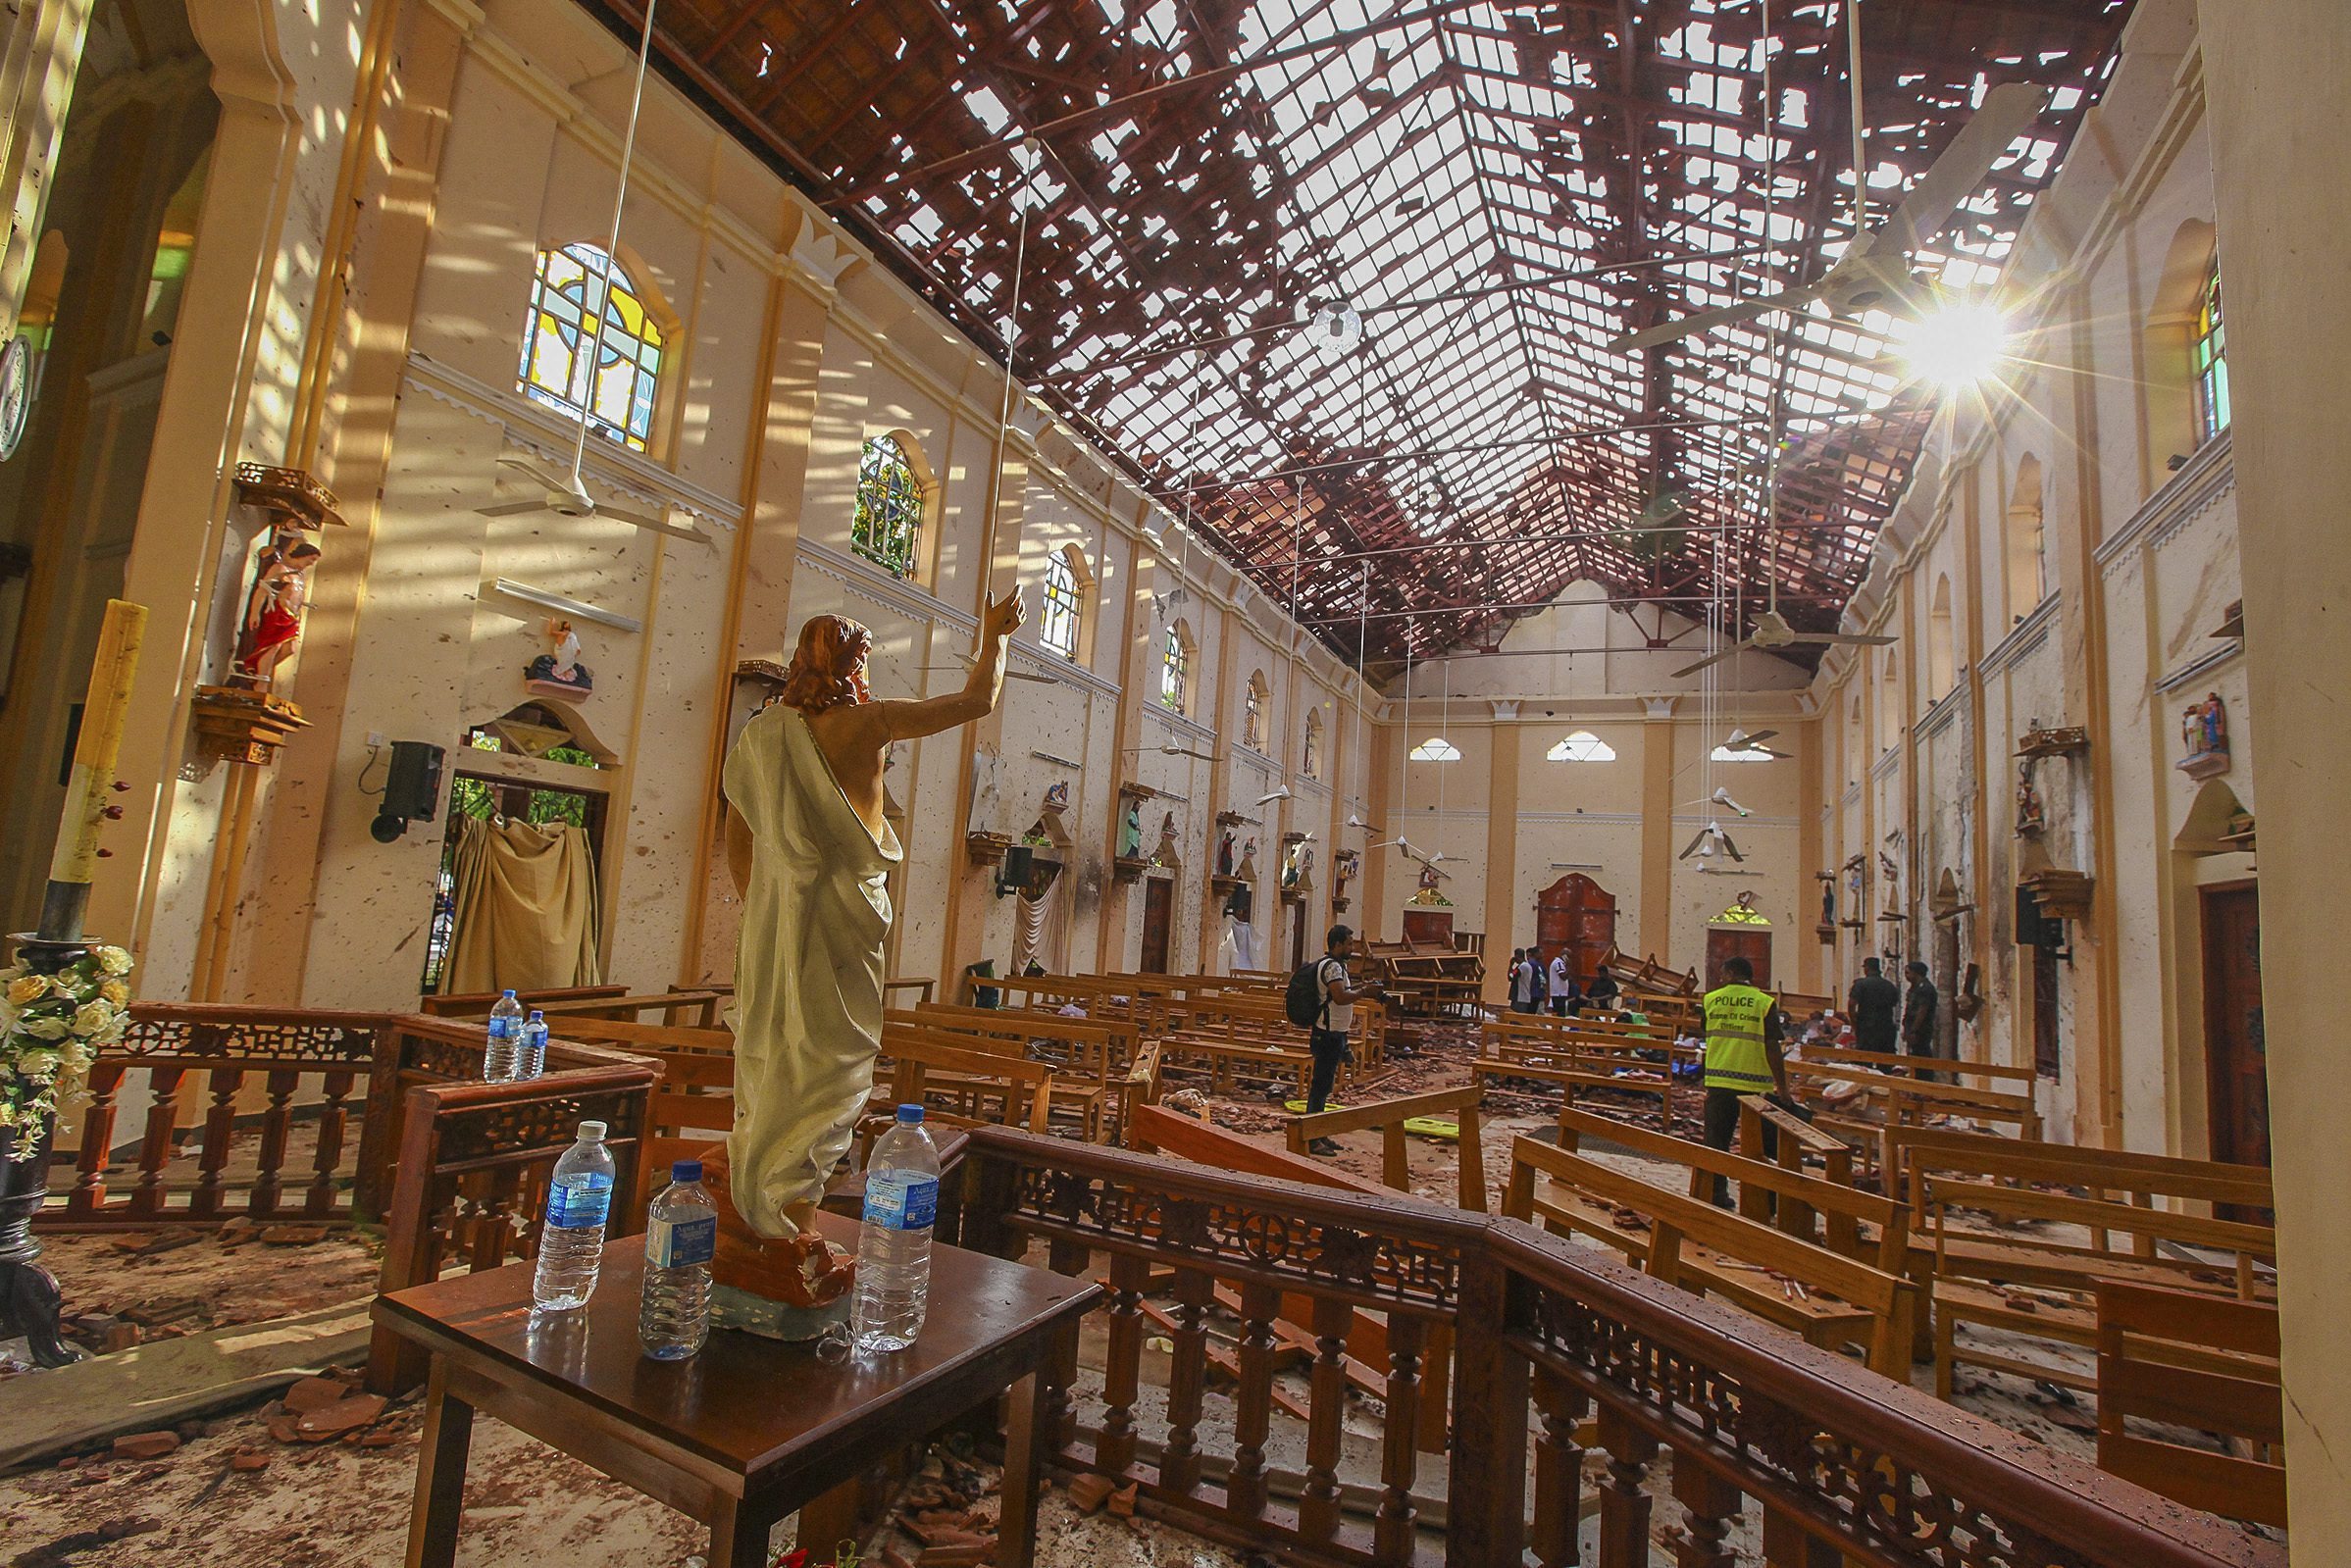 Sri Lanka ends emergency four months after Easter attacks